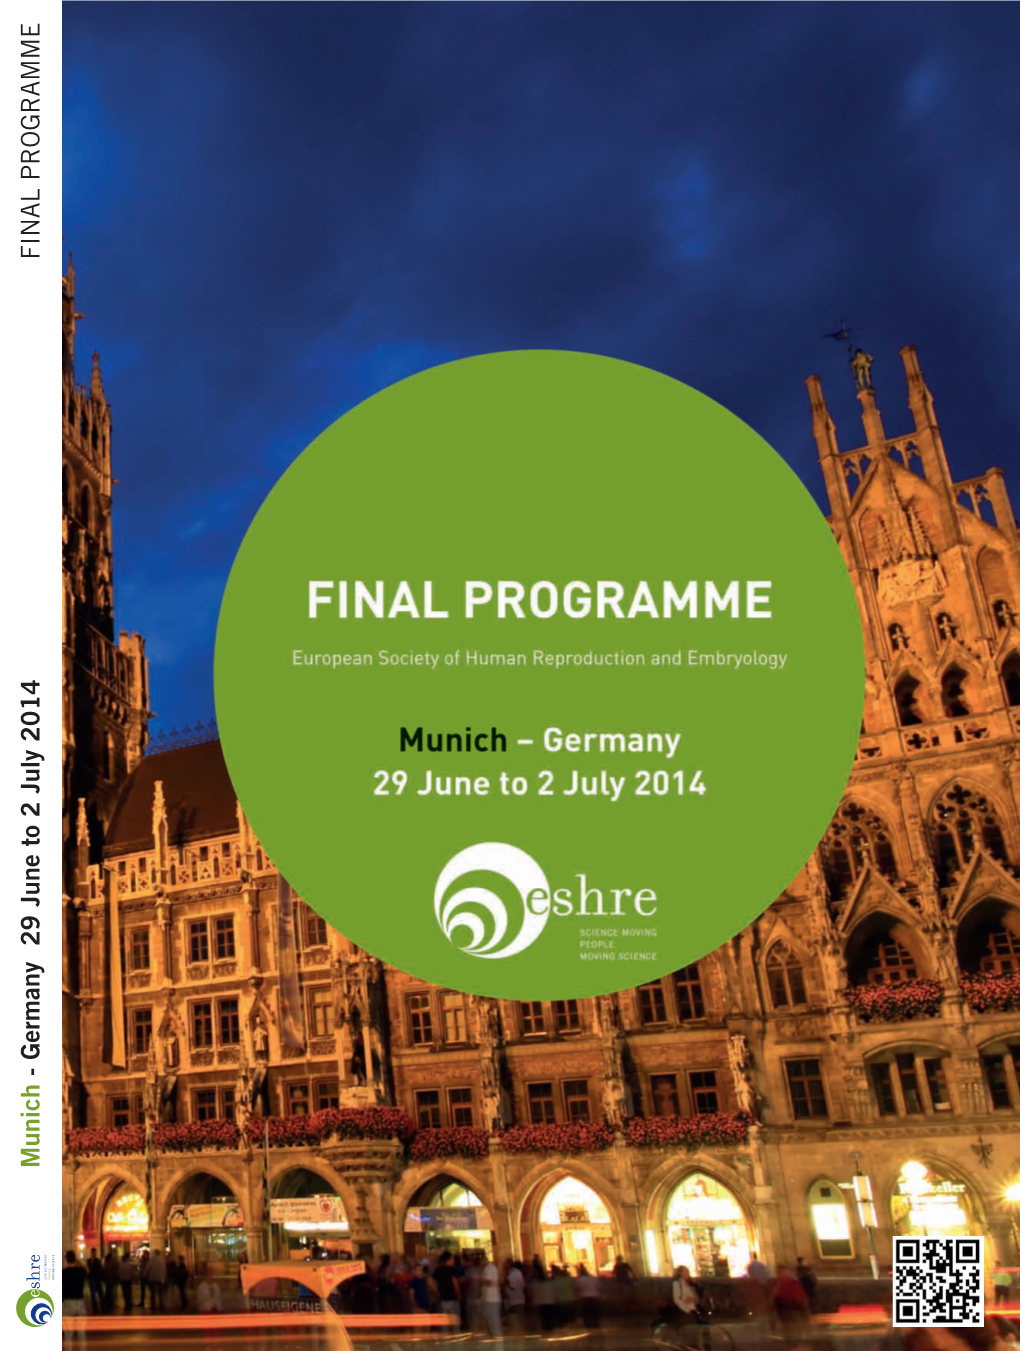 Munich - Germany 29 June to 2 July 2014 FINAL PROGRAMME 2